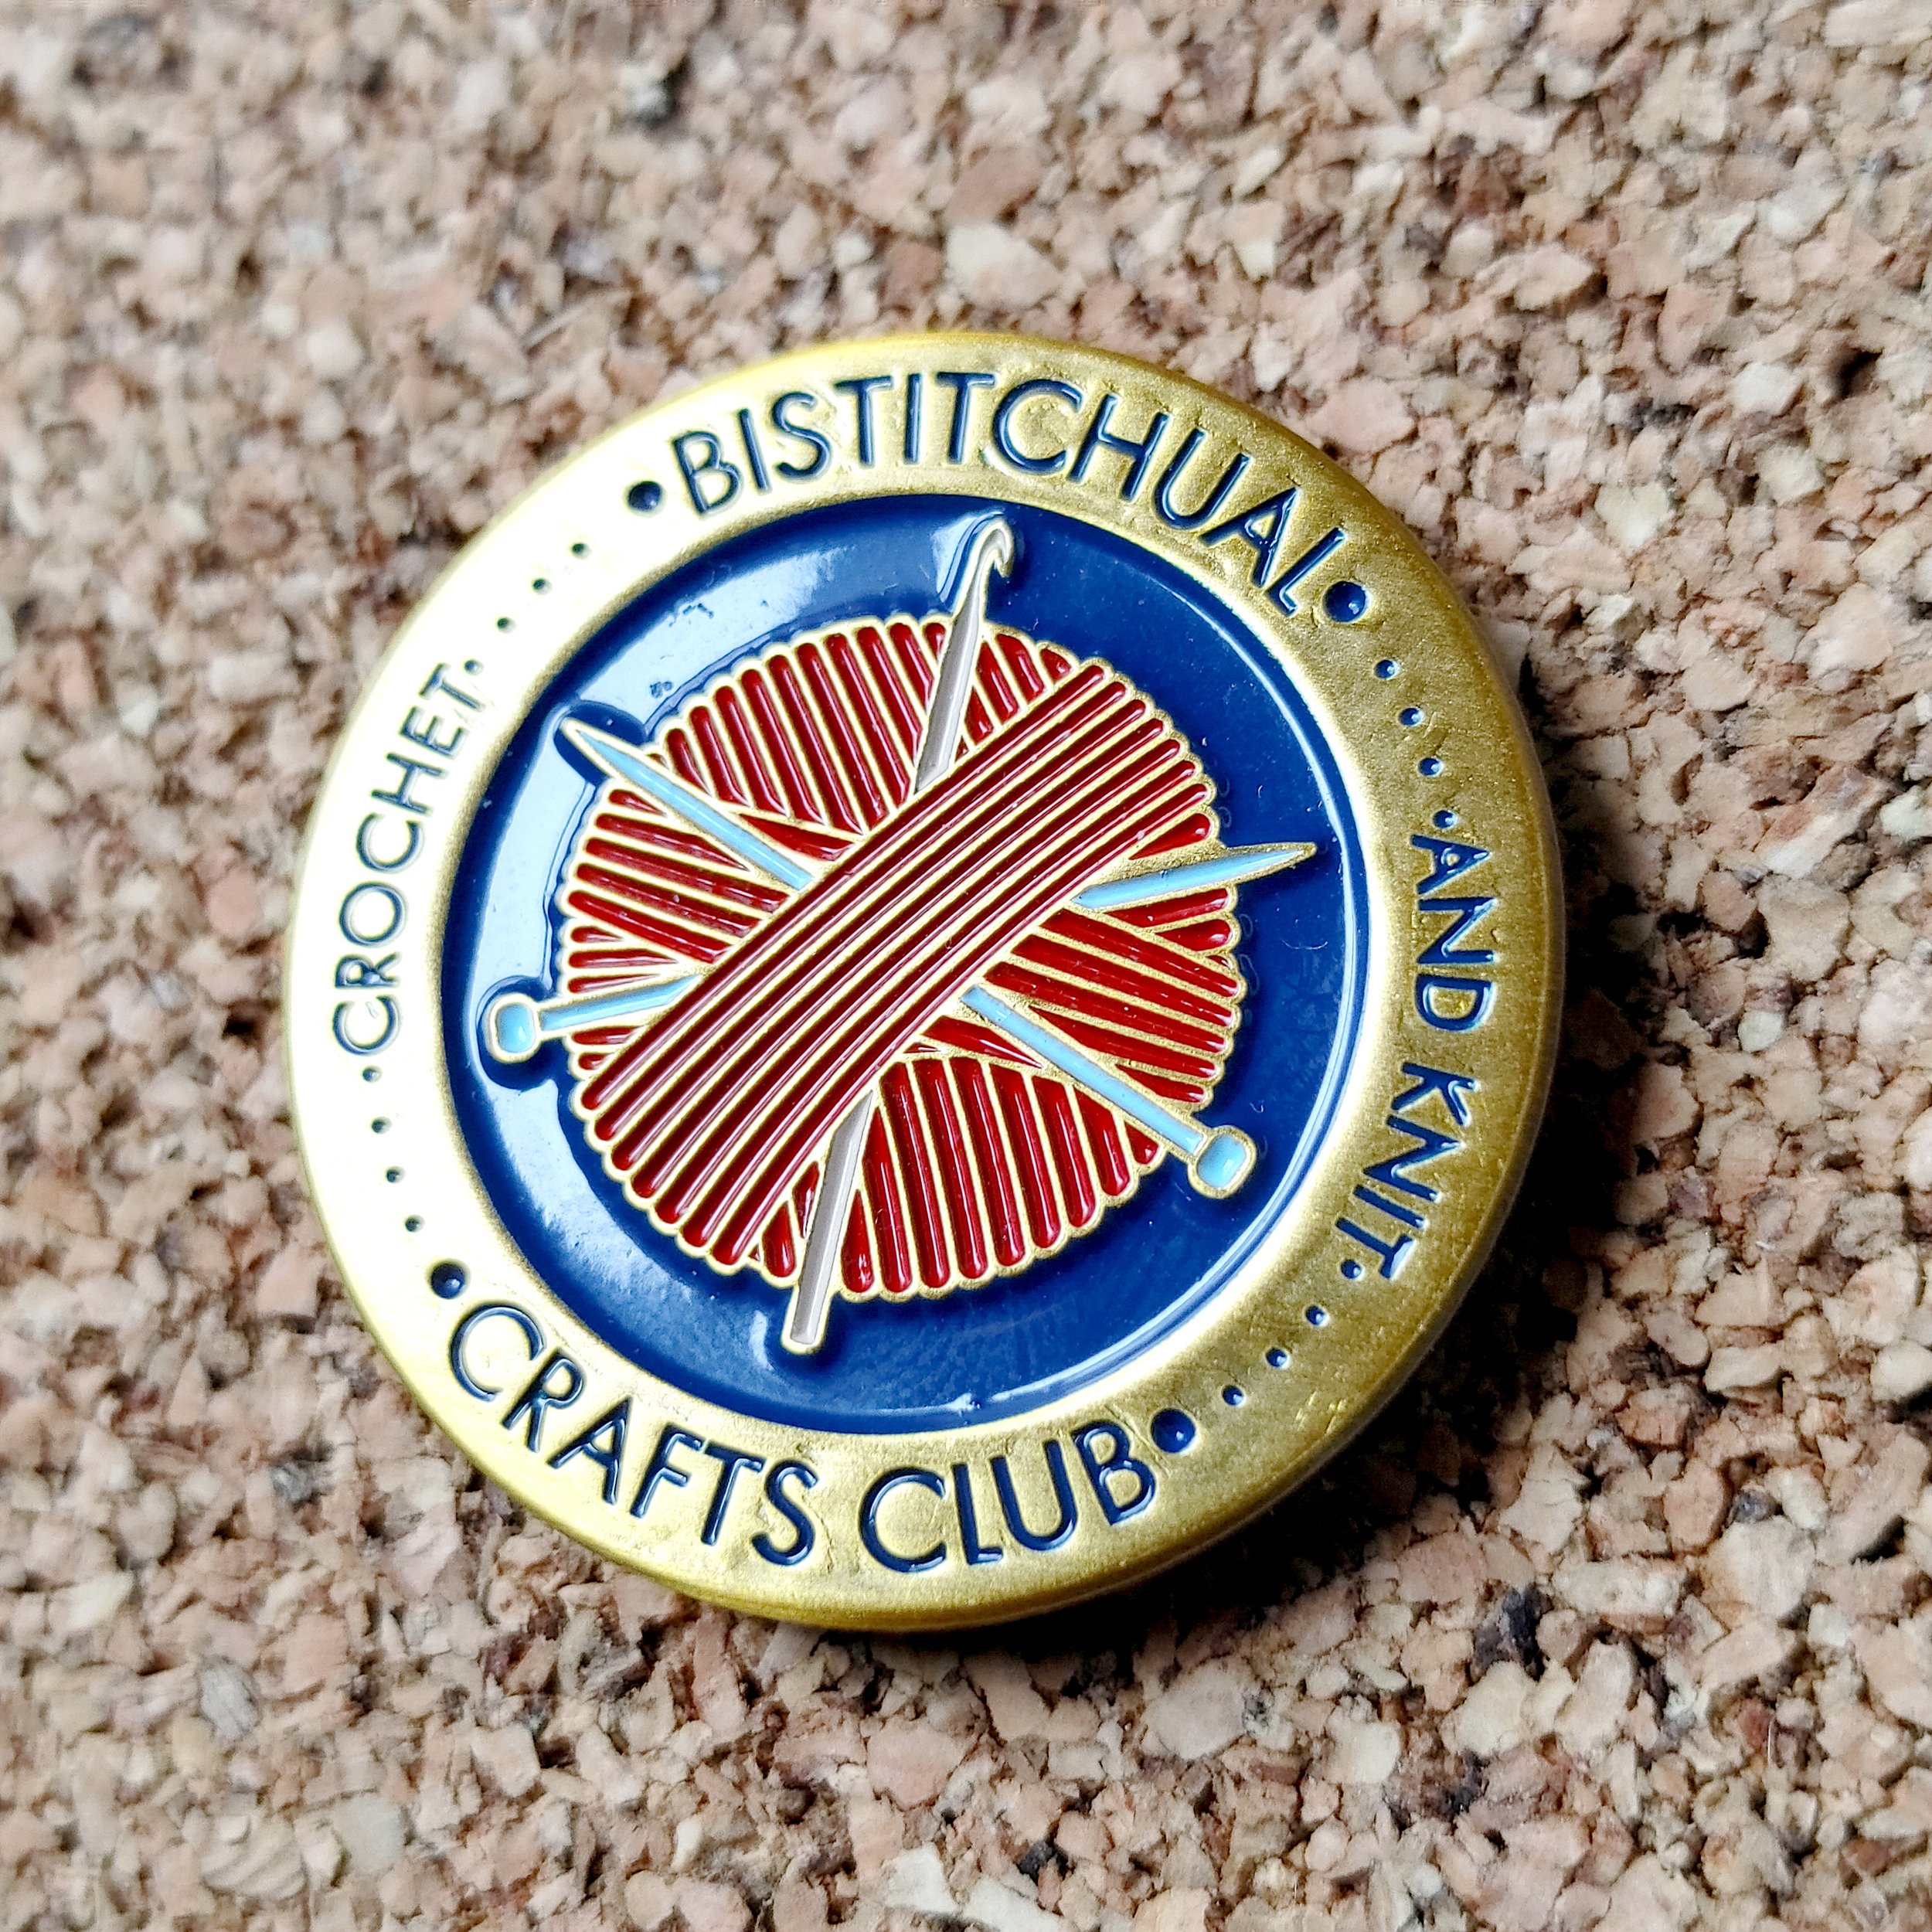 Bistitchual Crafts Club Pin